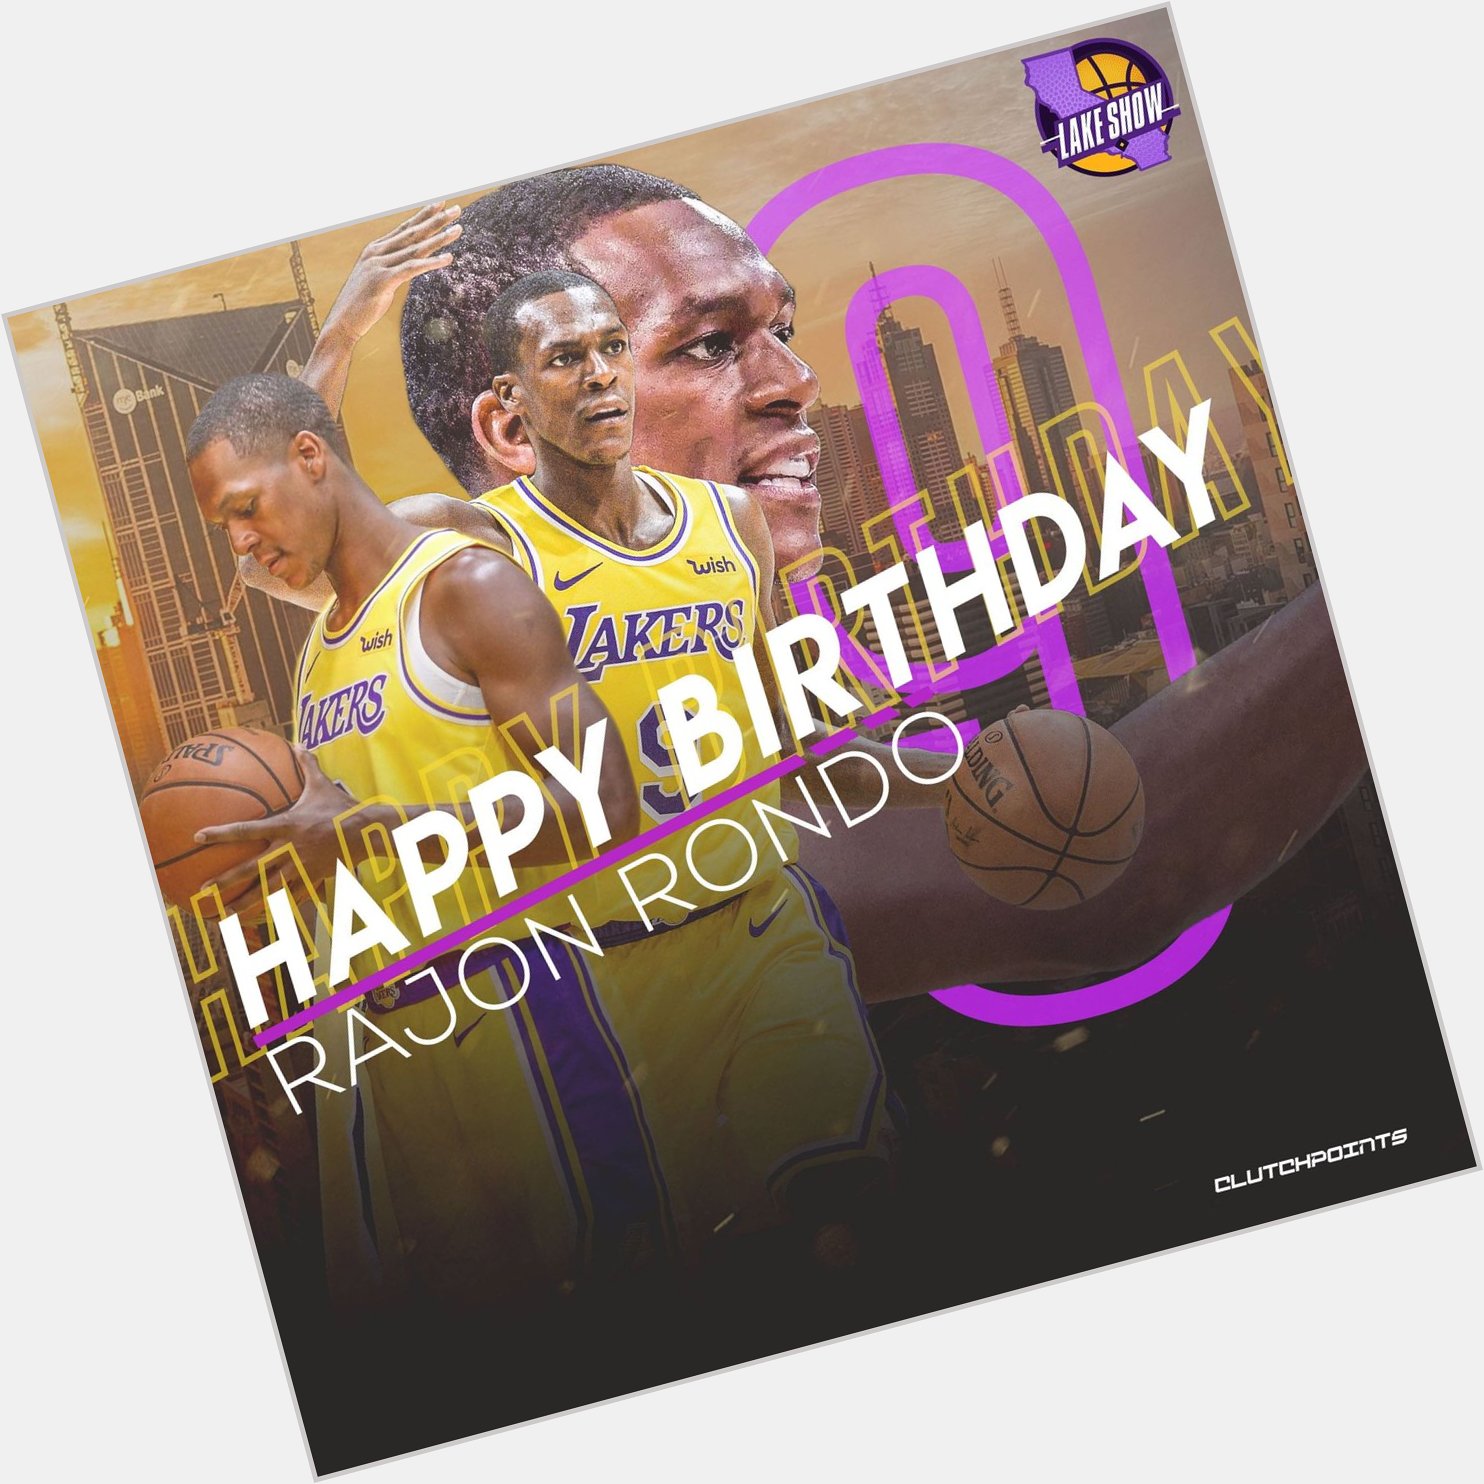 Happy birthday Rajon Rondo!   